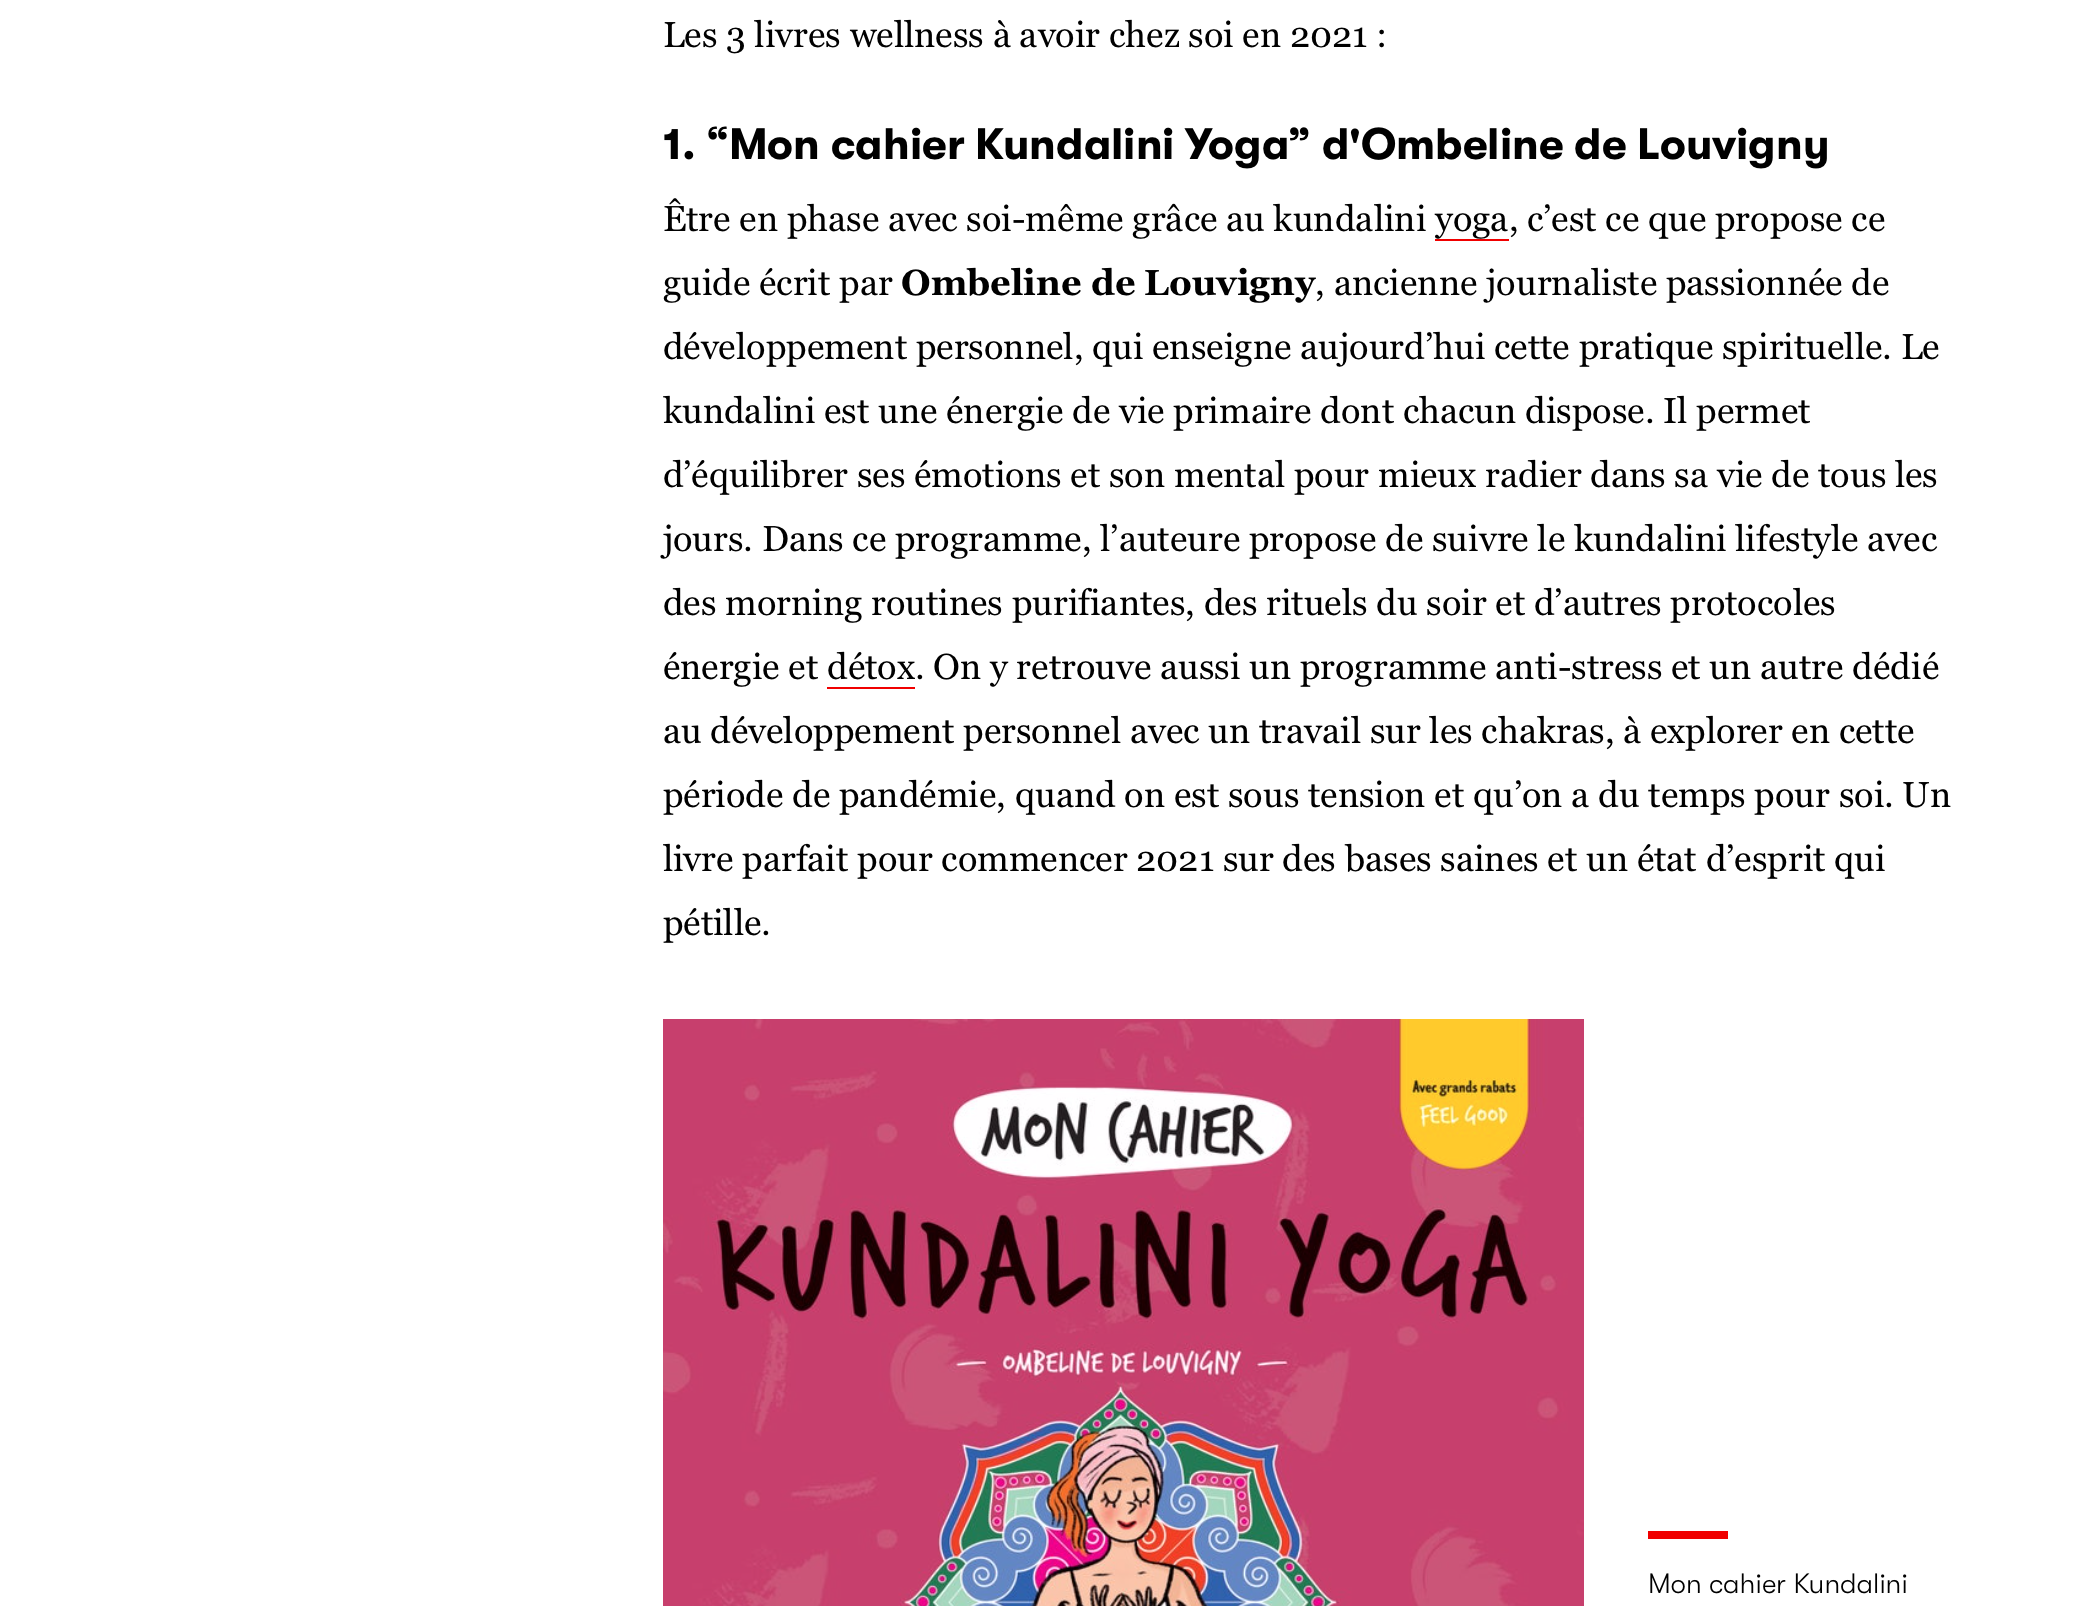 kundalini ; yoga ; kundalini yoga ; vogue ; bien-être ; wellness ; livre bien-être ; ombeline de Louvigny ; ombelinetips